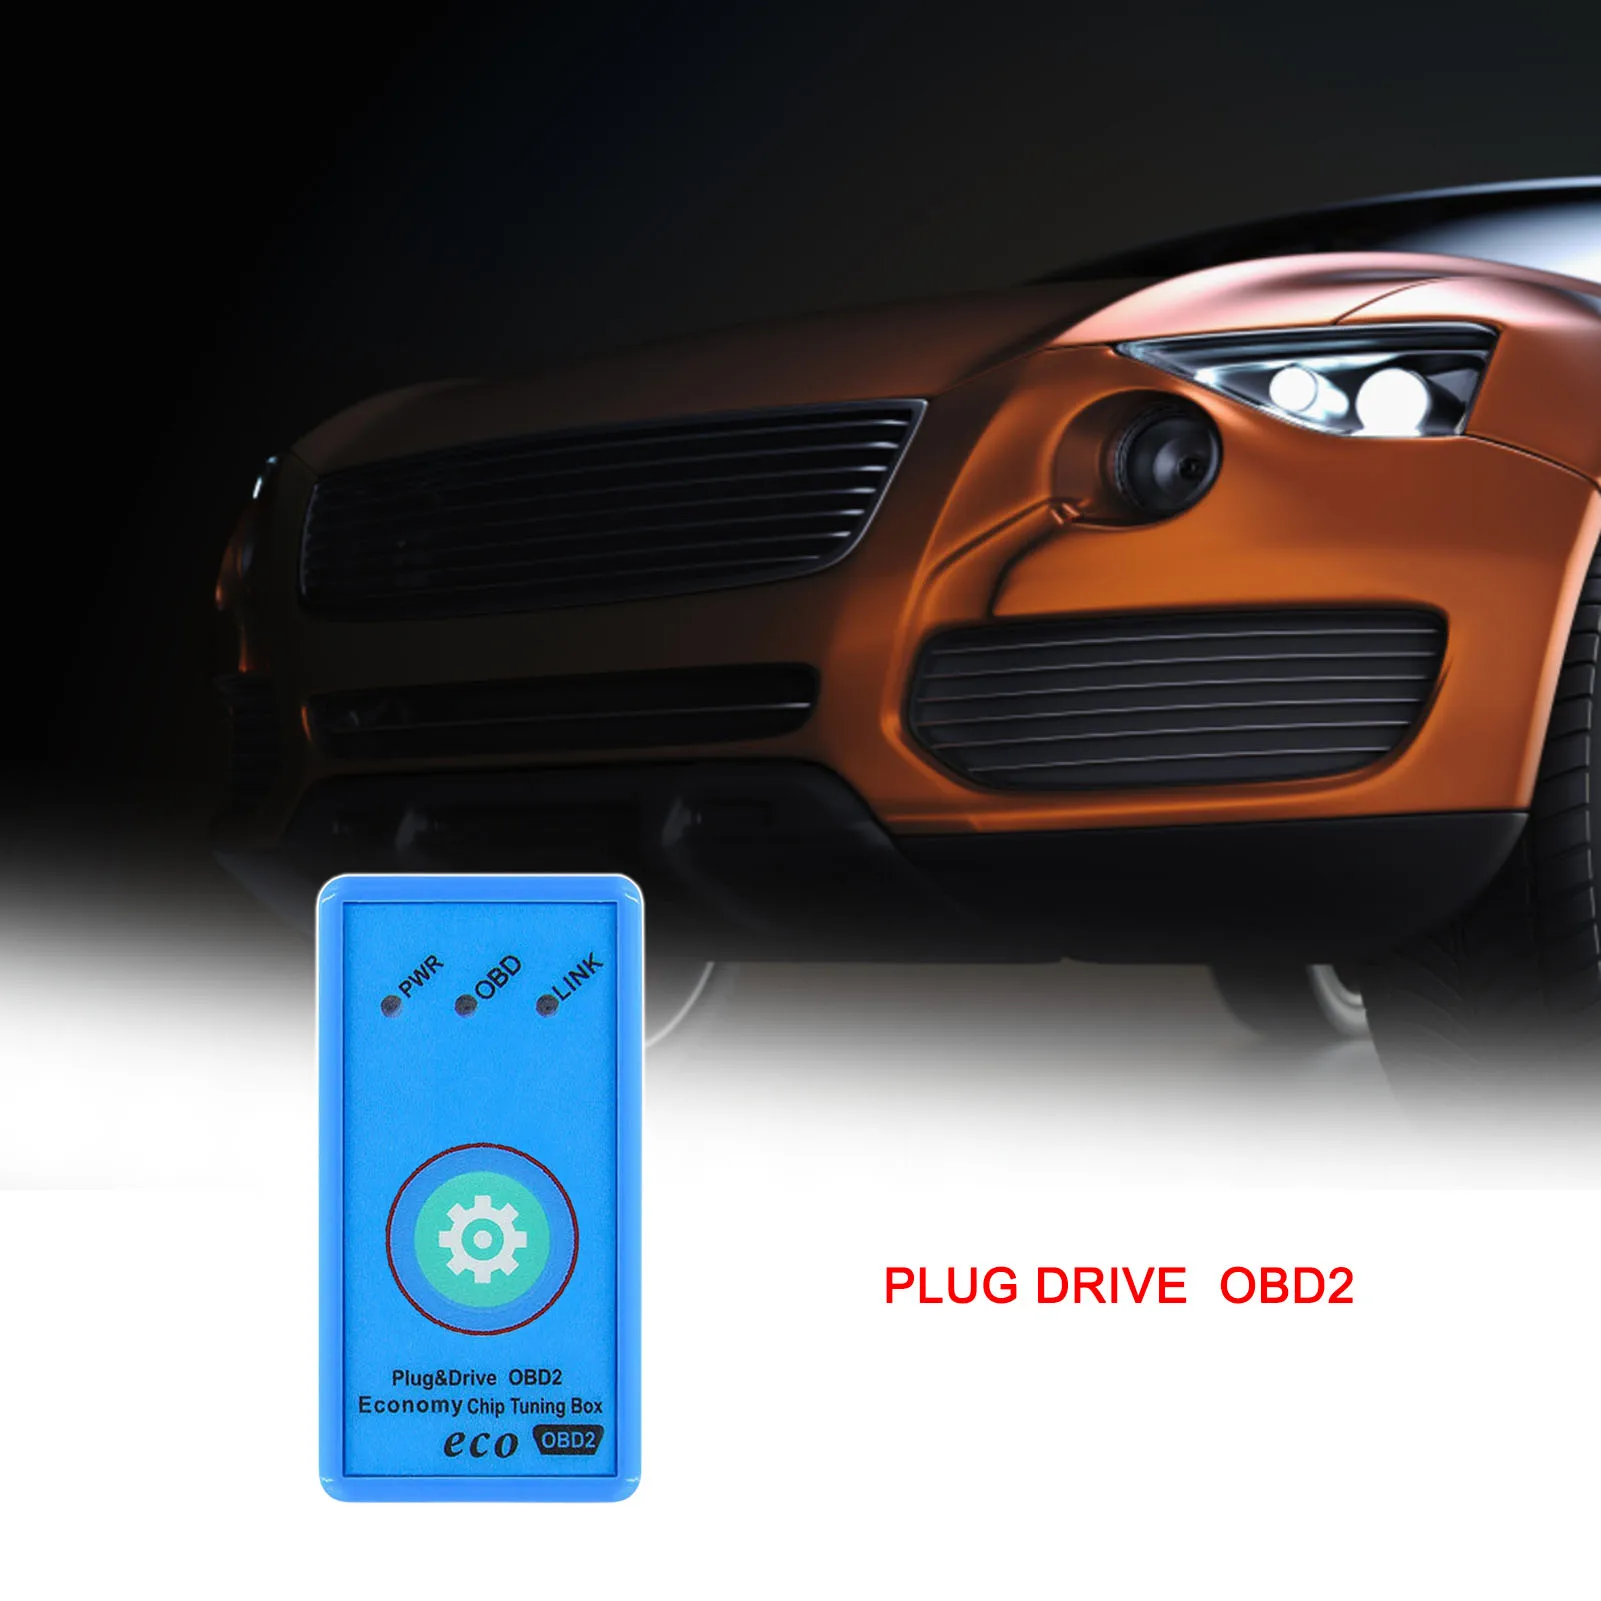 

Car Fuel Save ECO OBD2 Chip Tuning Box Eco OBD2 Economy Plug Drive Car Energy Fuel Saver Car Accessories For Diesel Gas Cars